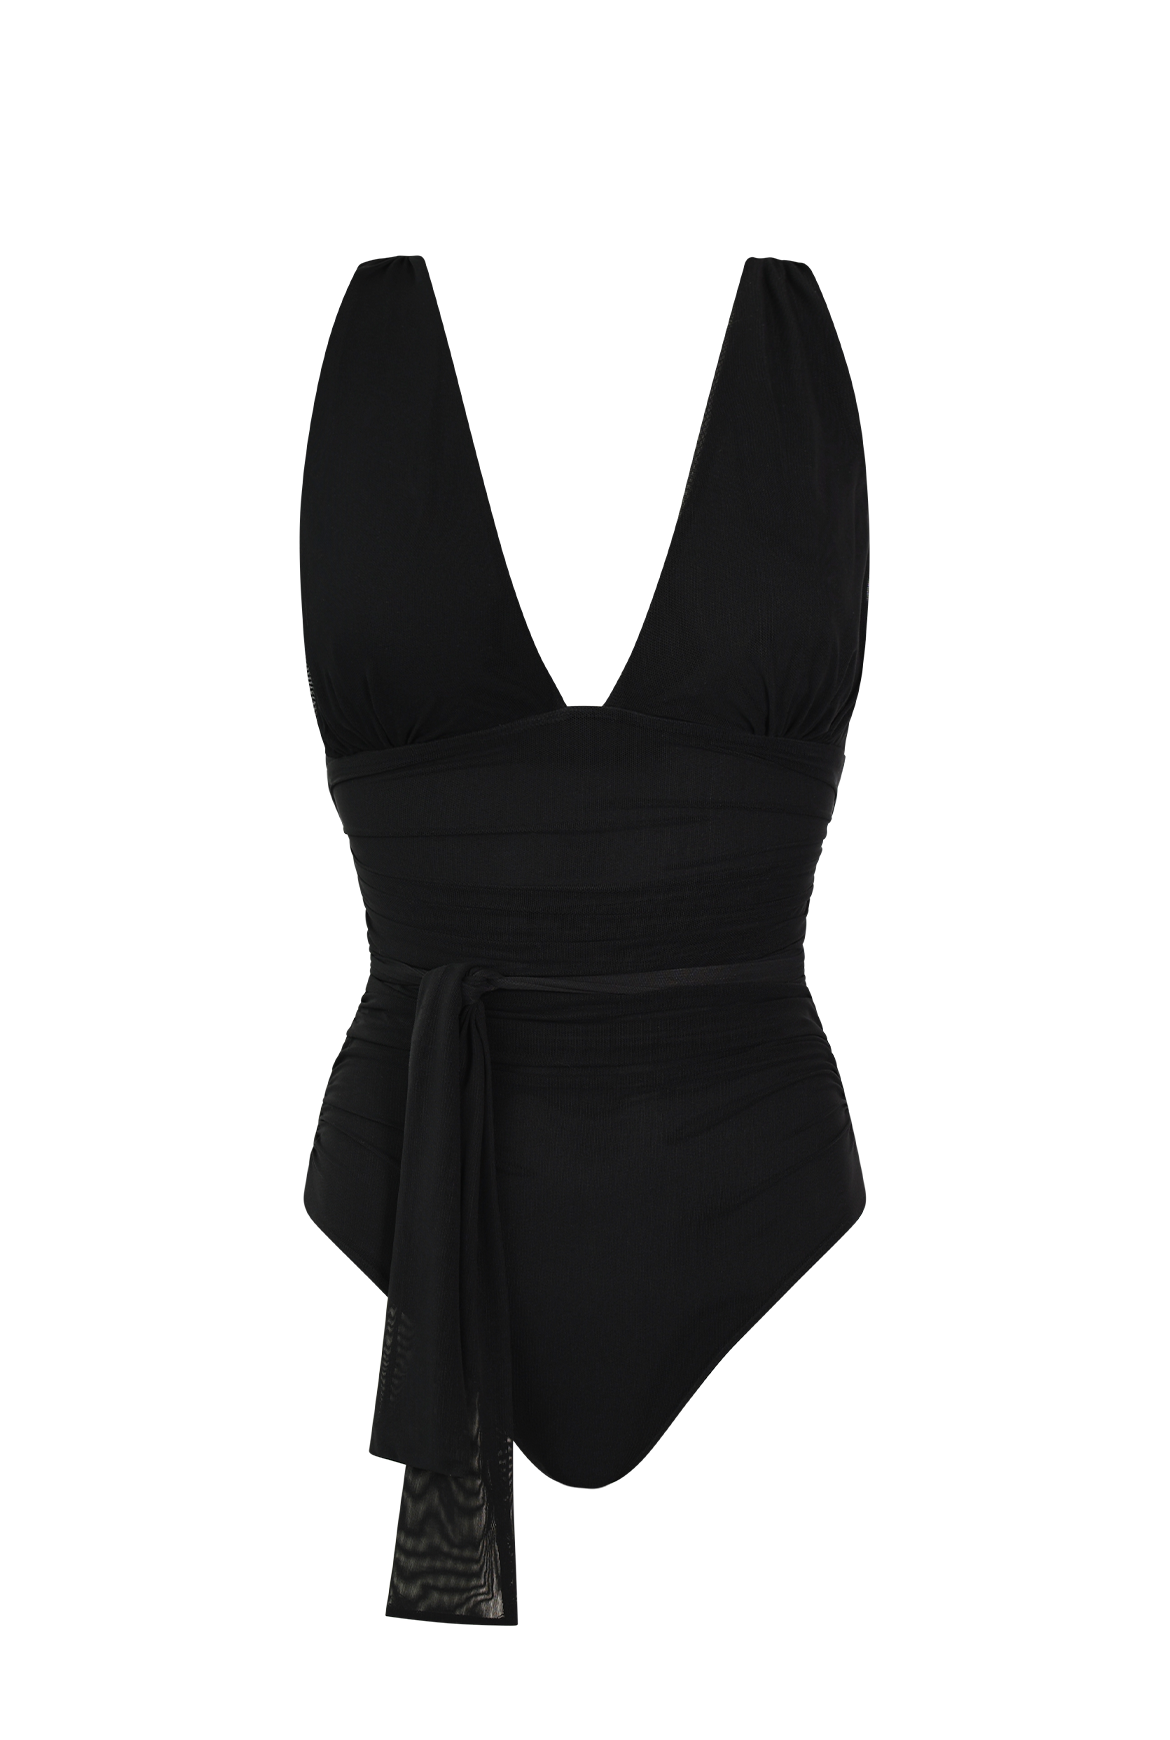 Black Tulle Swimsuit